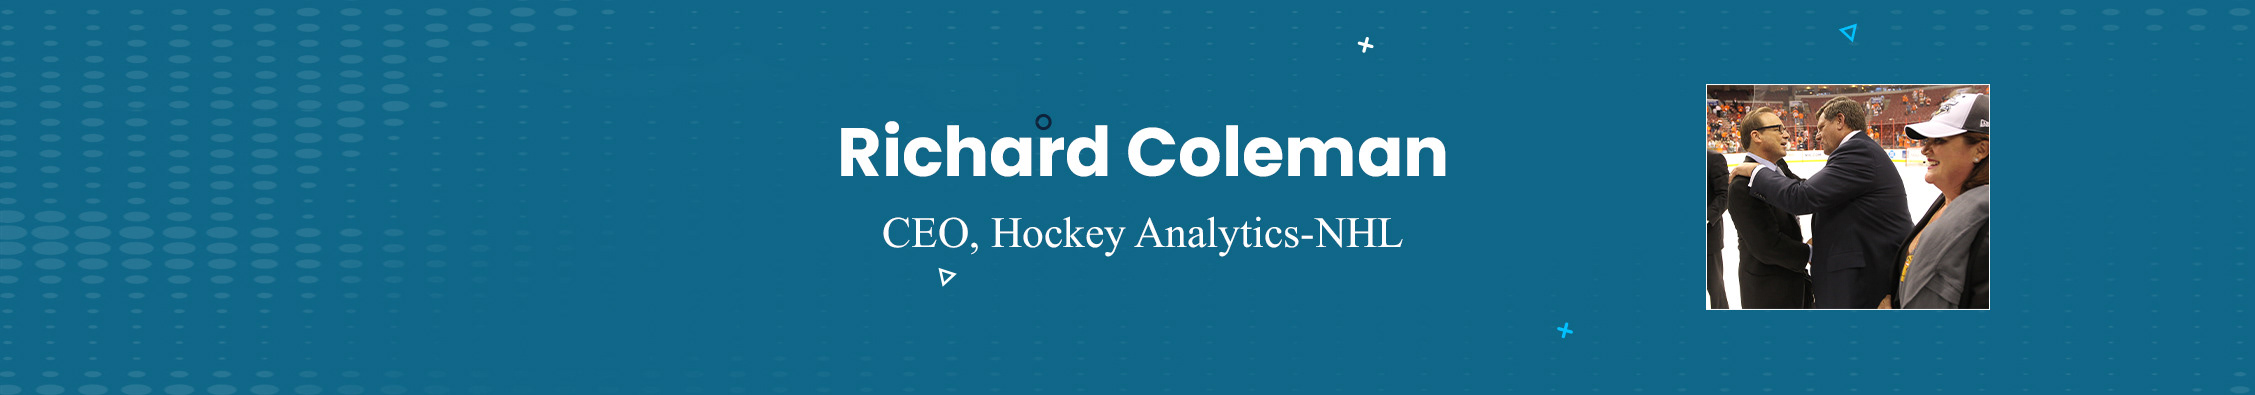 Richard M. Coleman's profile banner